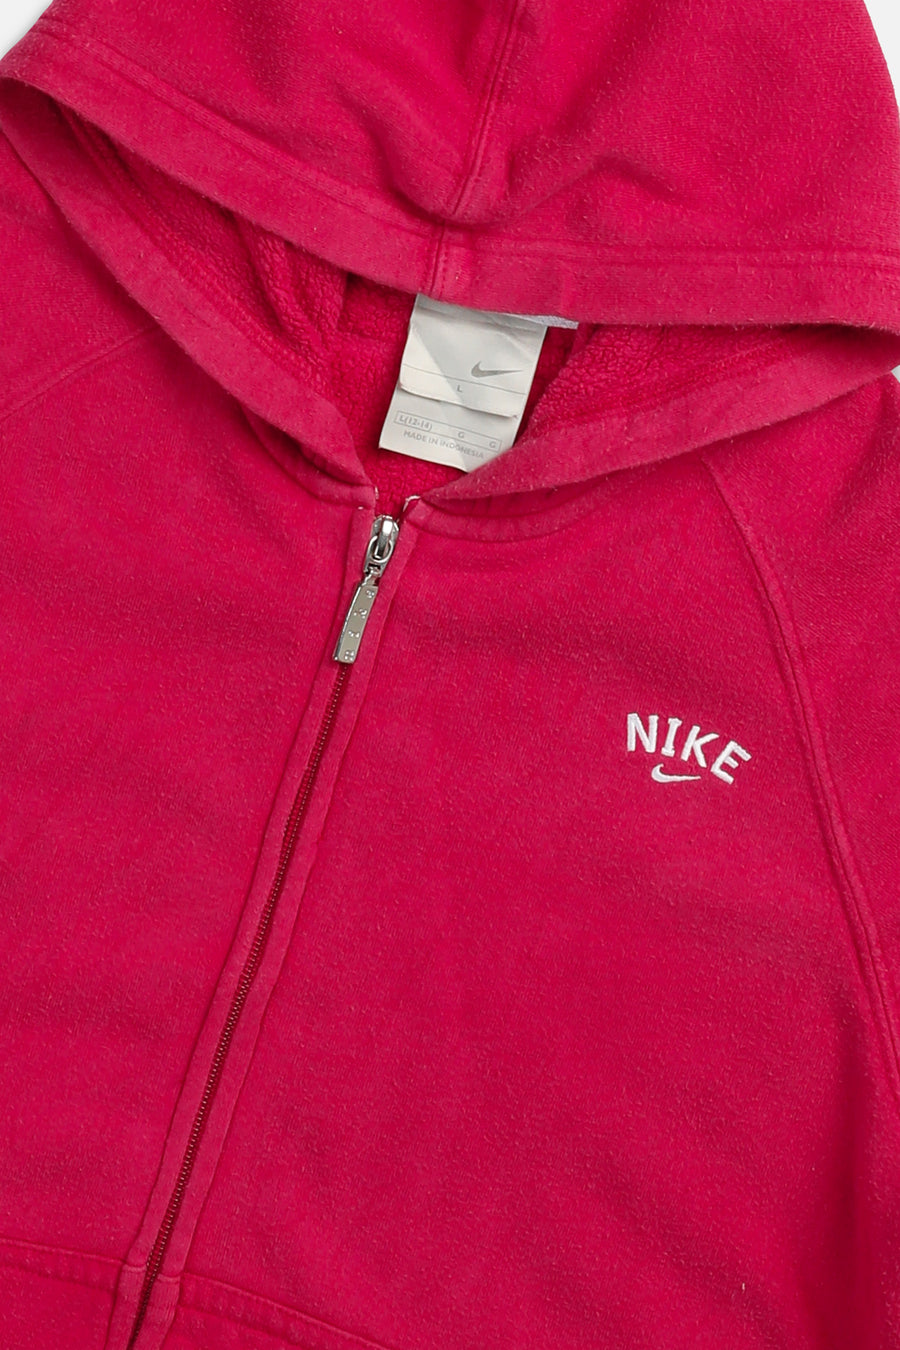 Vintage Nike Zip Sweatshirt - Women's L